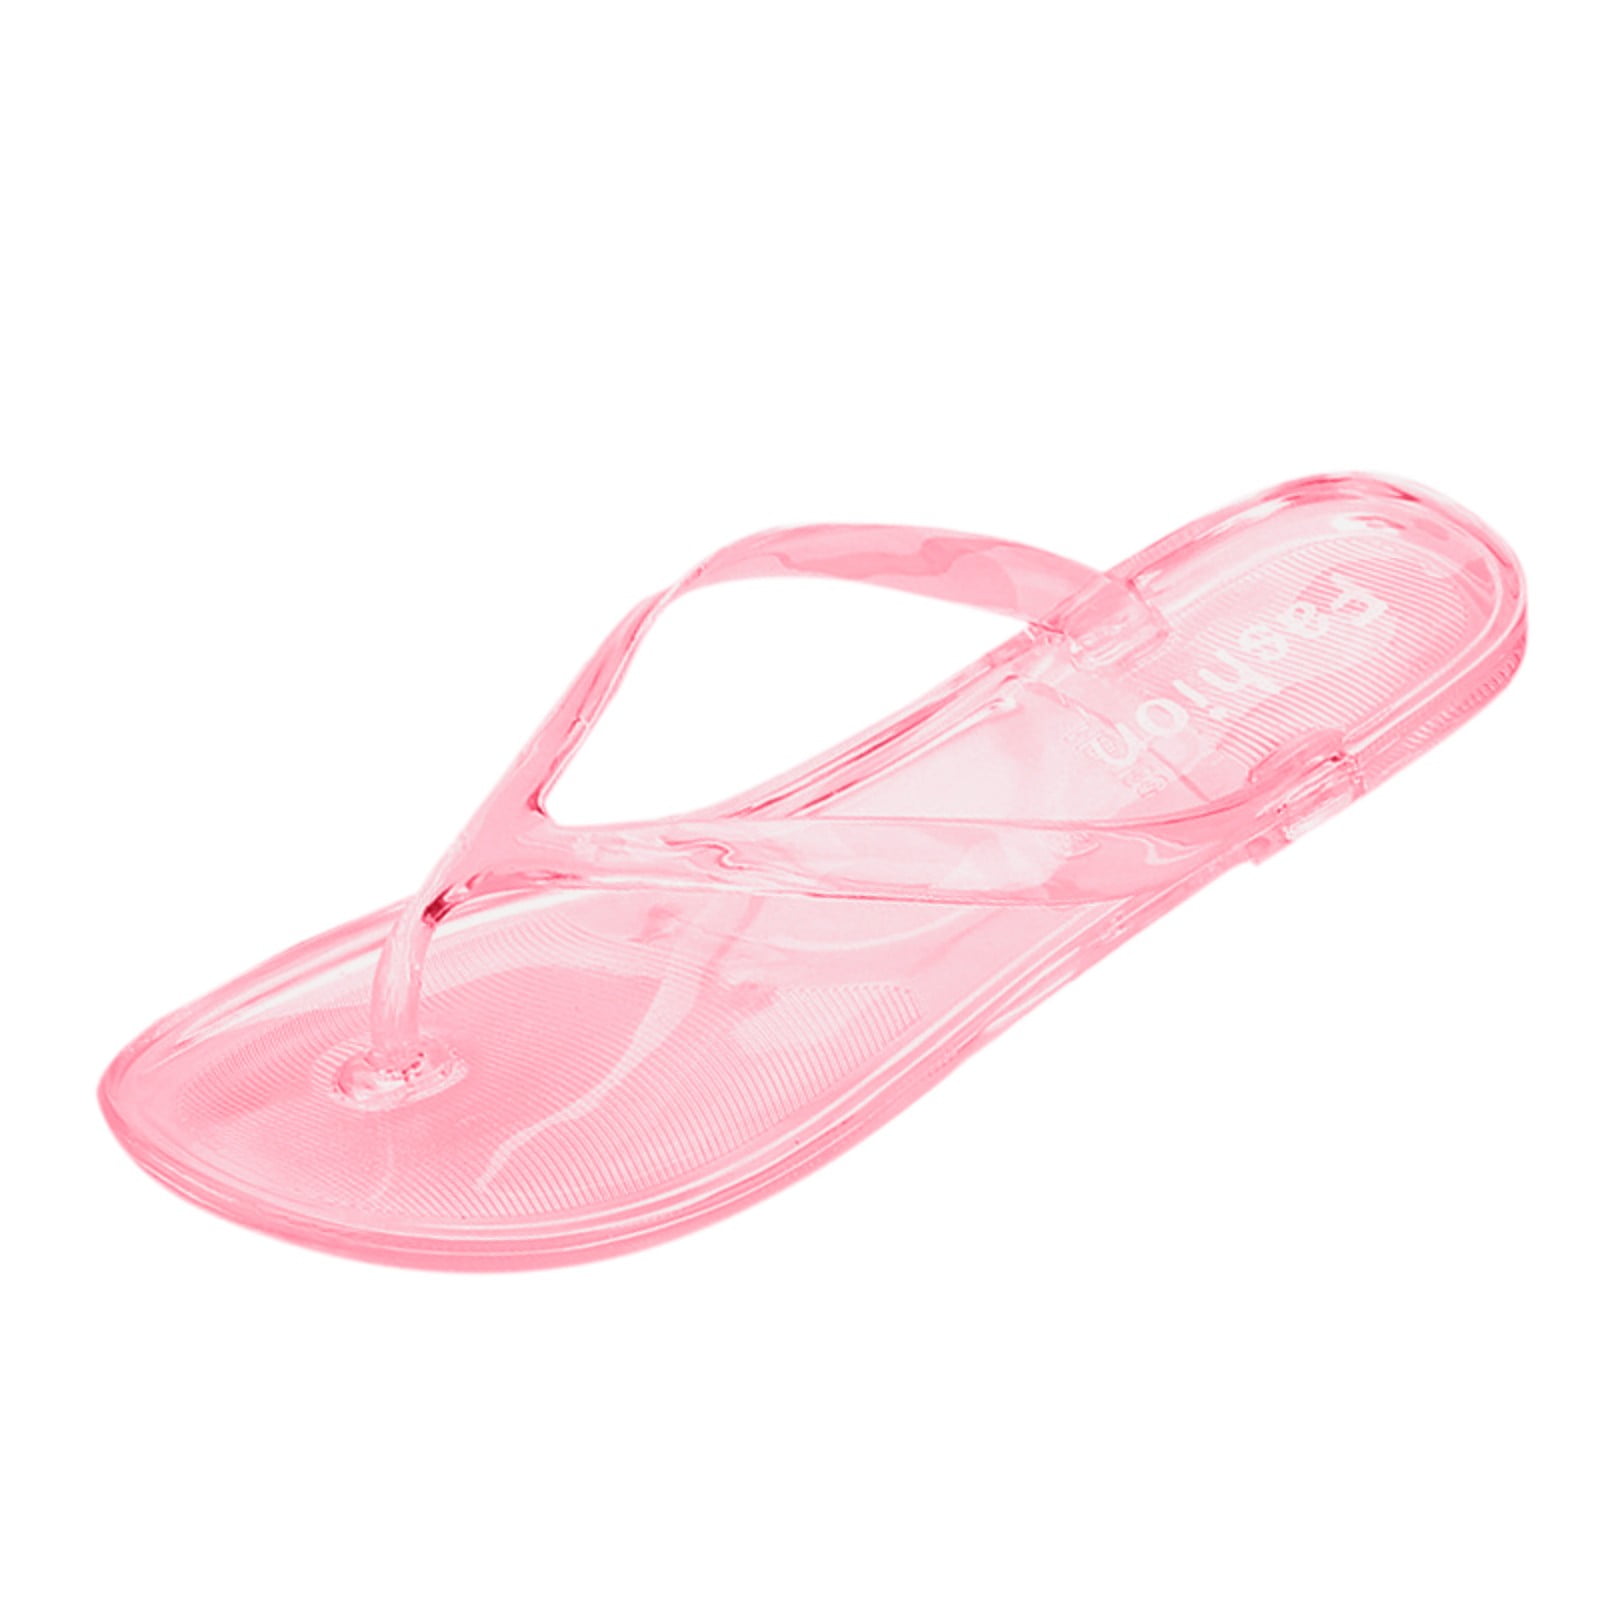 Quealent Adult Women Shoes Rubber Flip Flops for Women Beach